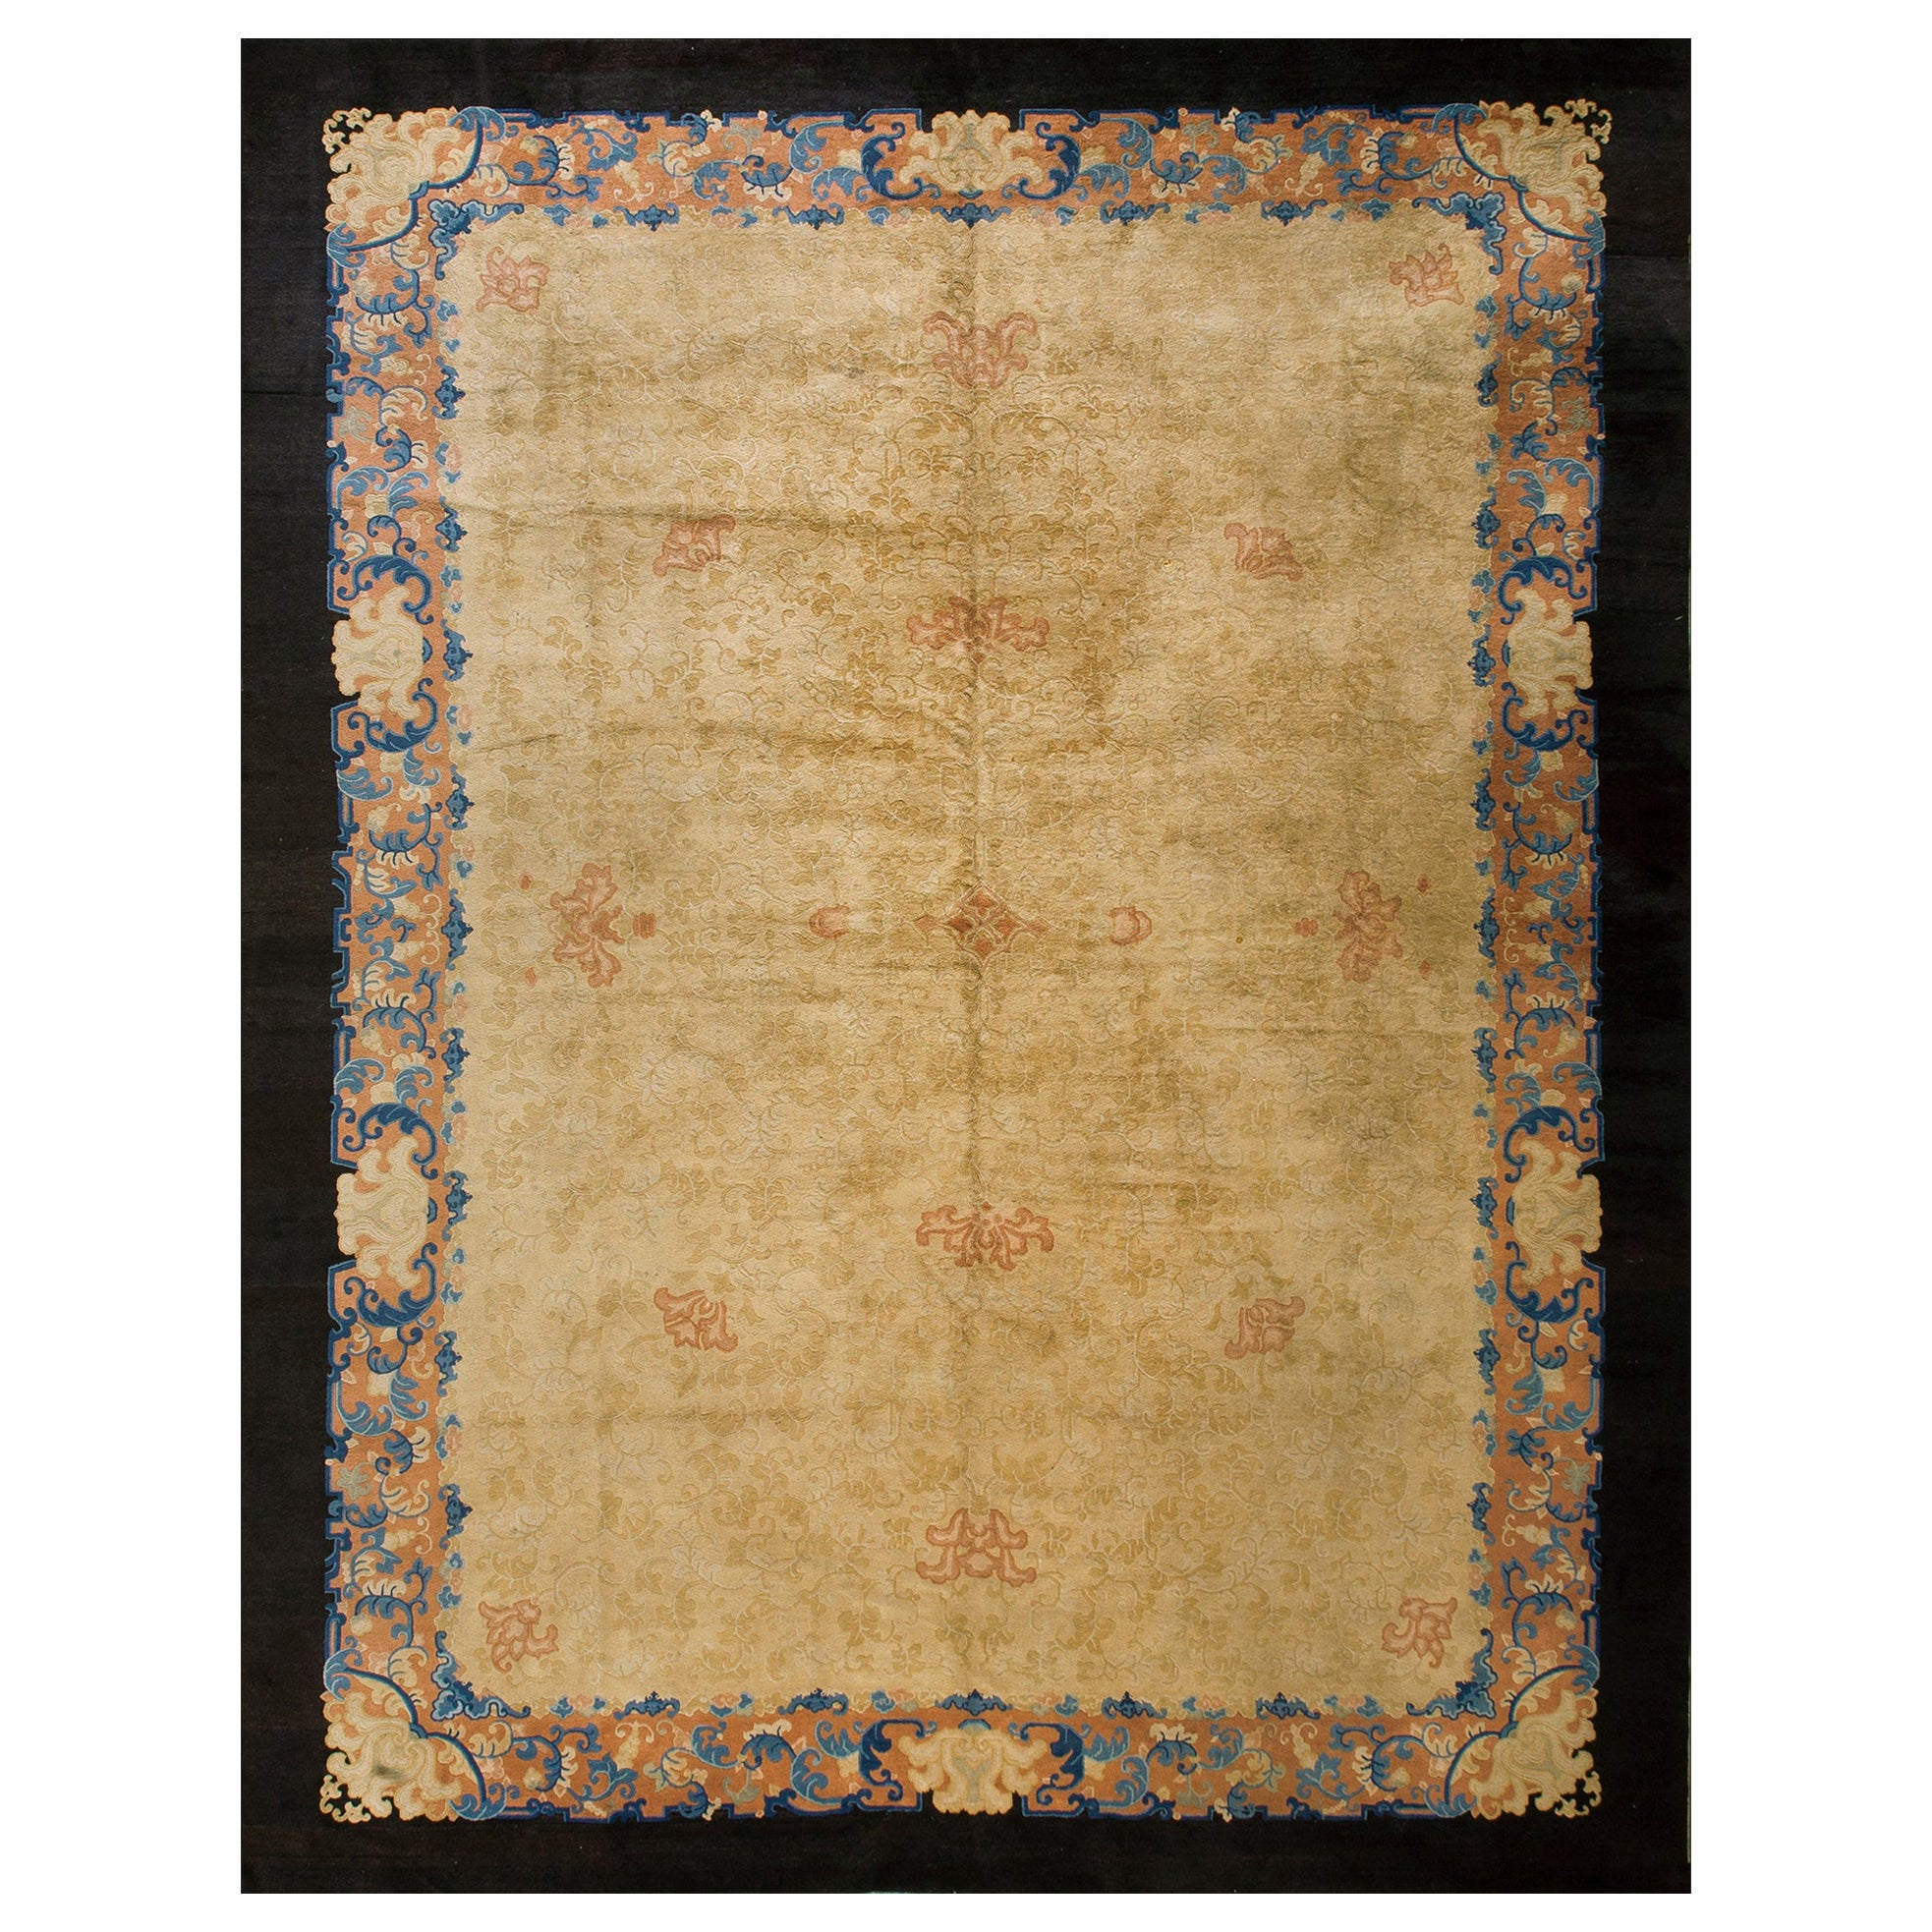 Early 20th Century Chinese Peking Carpet ( 11'3" x 14'9" - 343 x 450 )